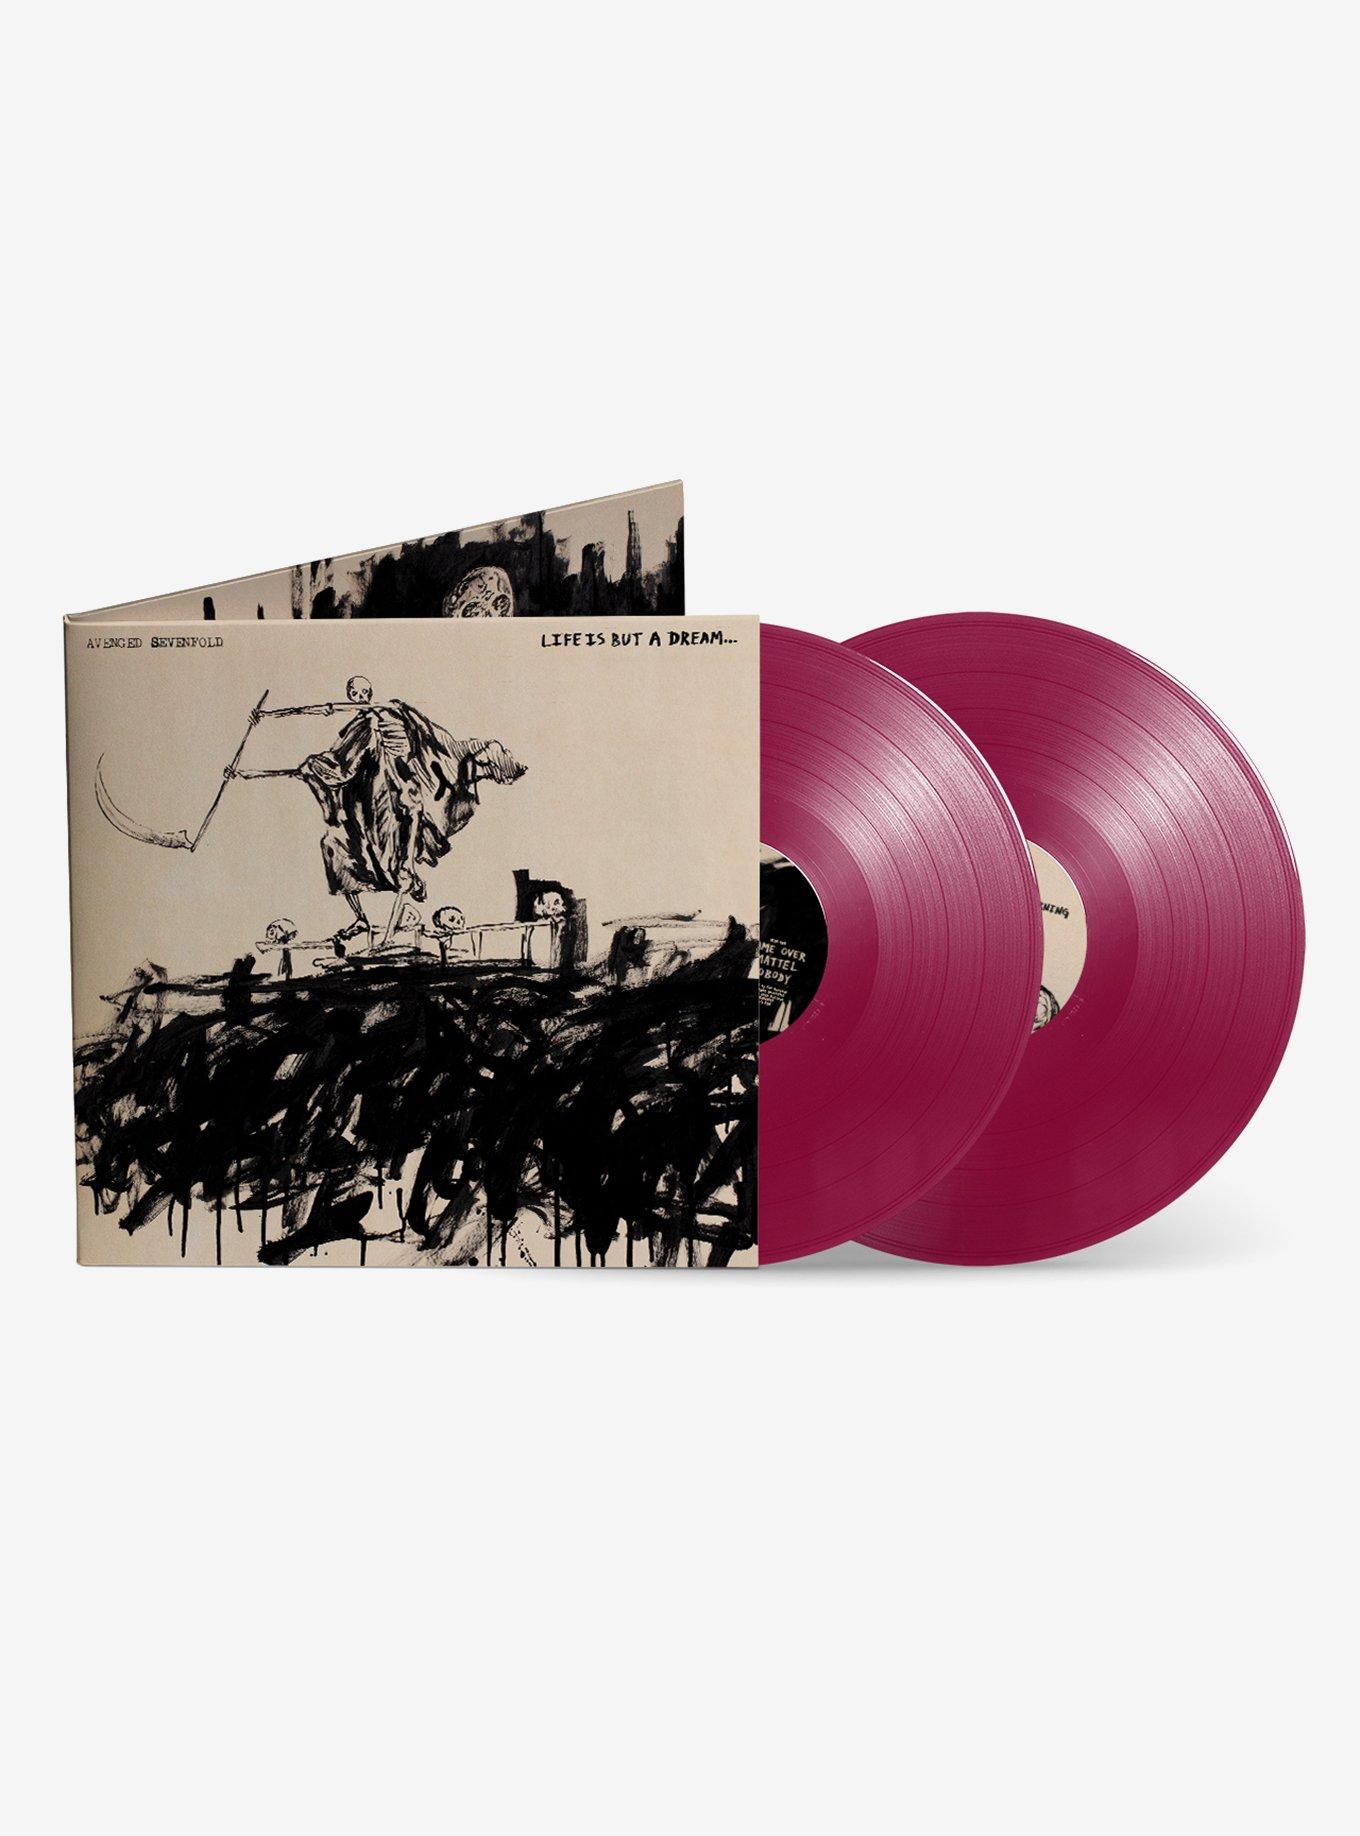 May Jailer - Sirens Colored Vinyl Edition - Vinyl 2LP